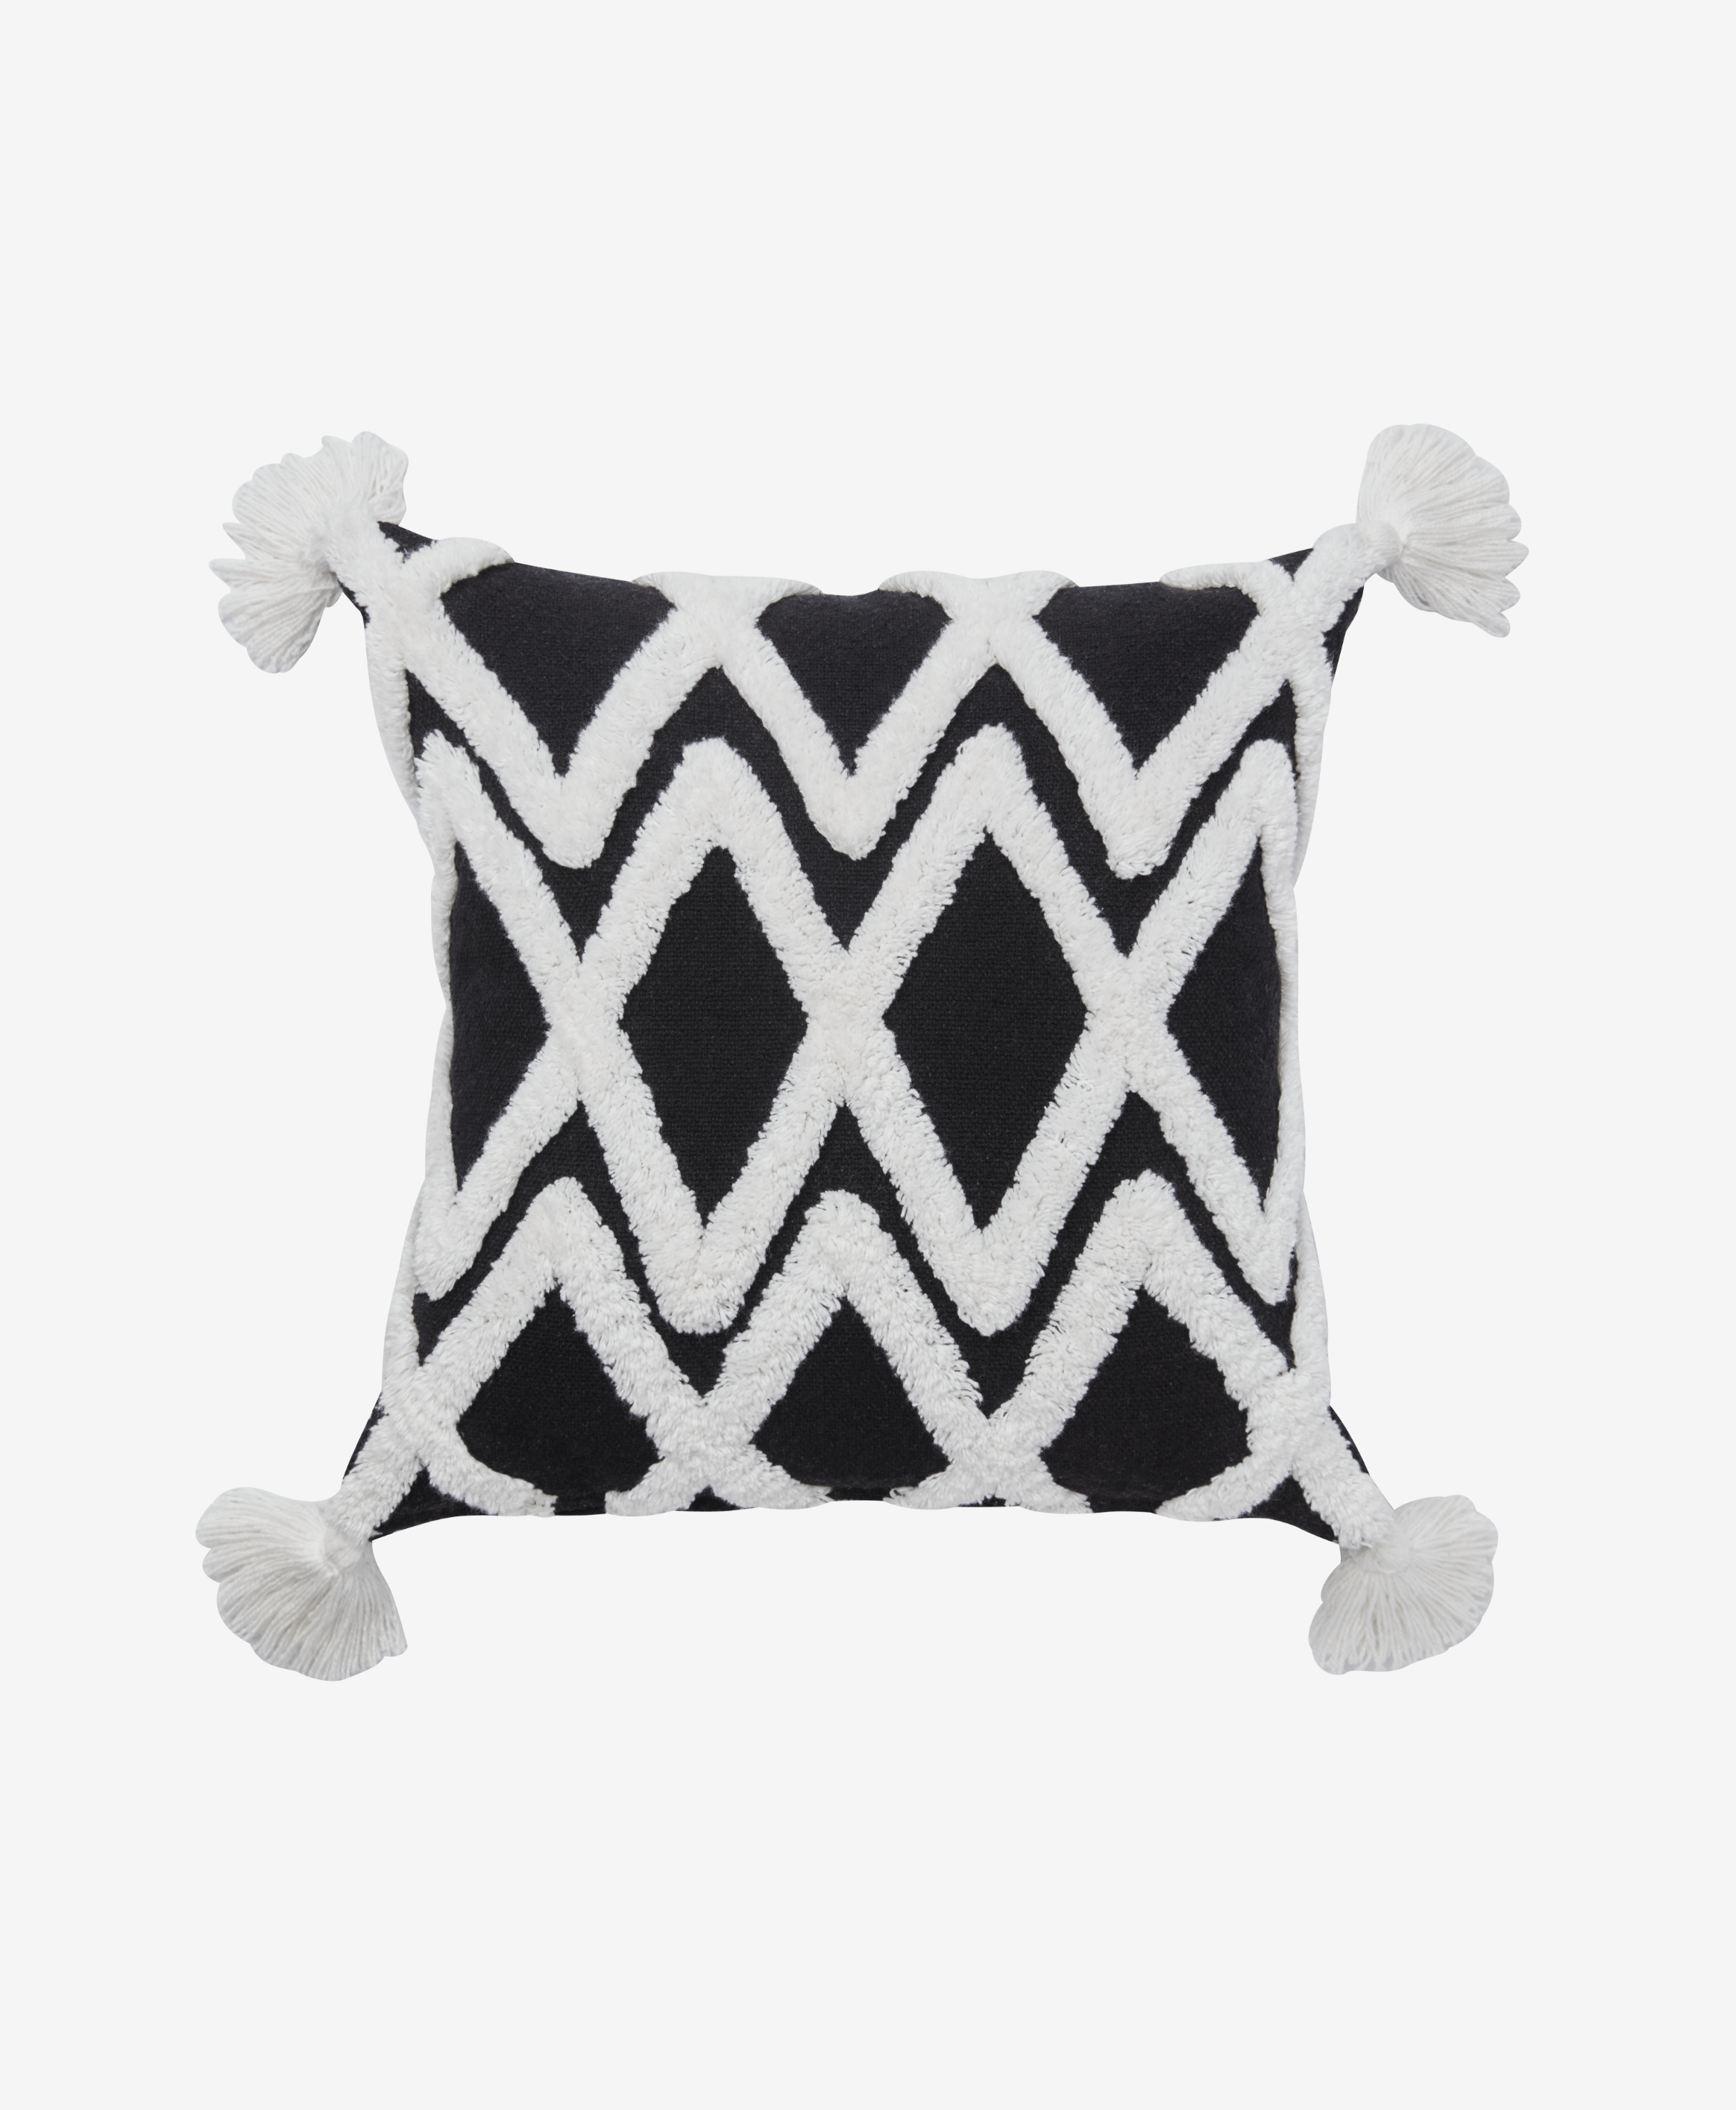 Dekorativni jastuk sa belim pletenim dezenom, crna, bela, 45 x 45 cm